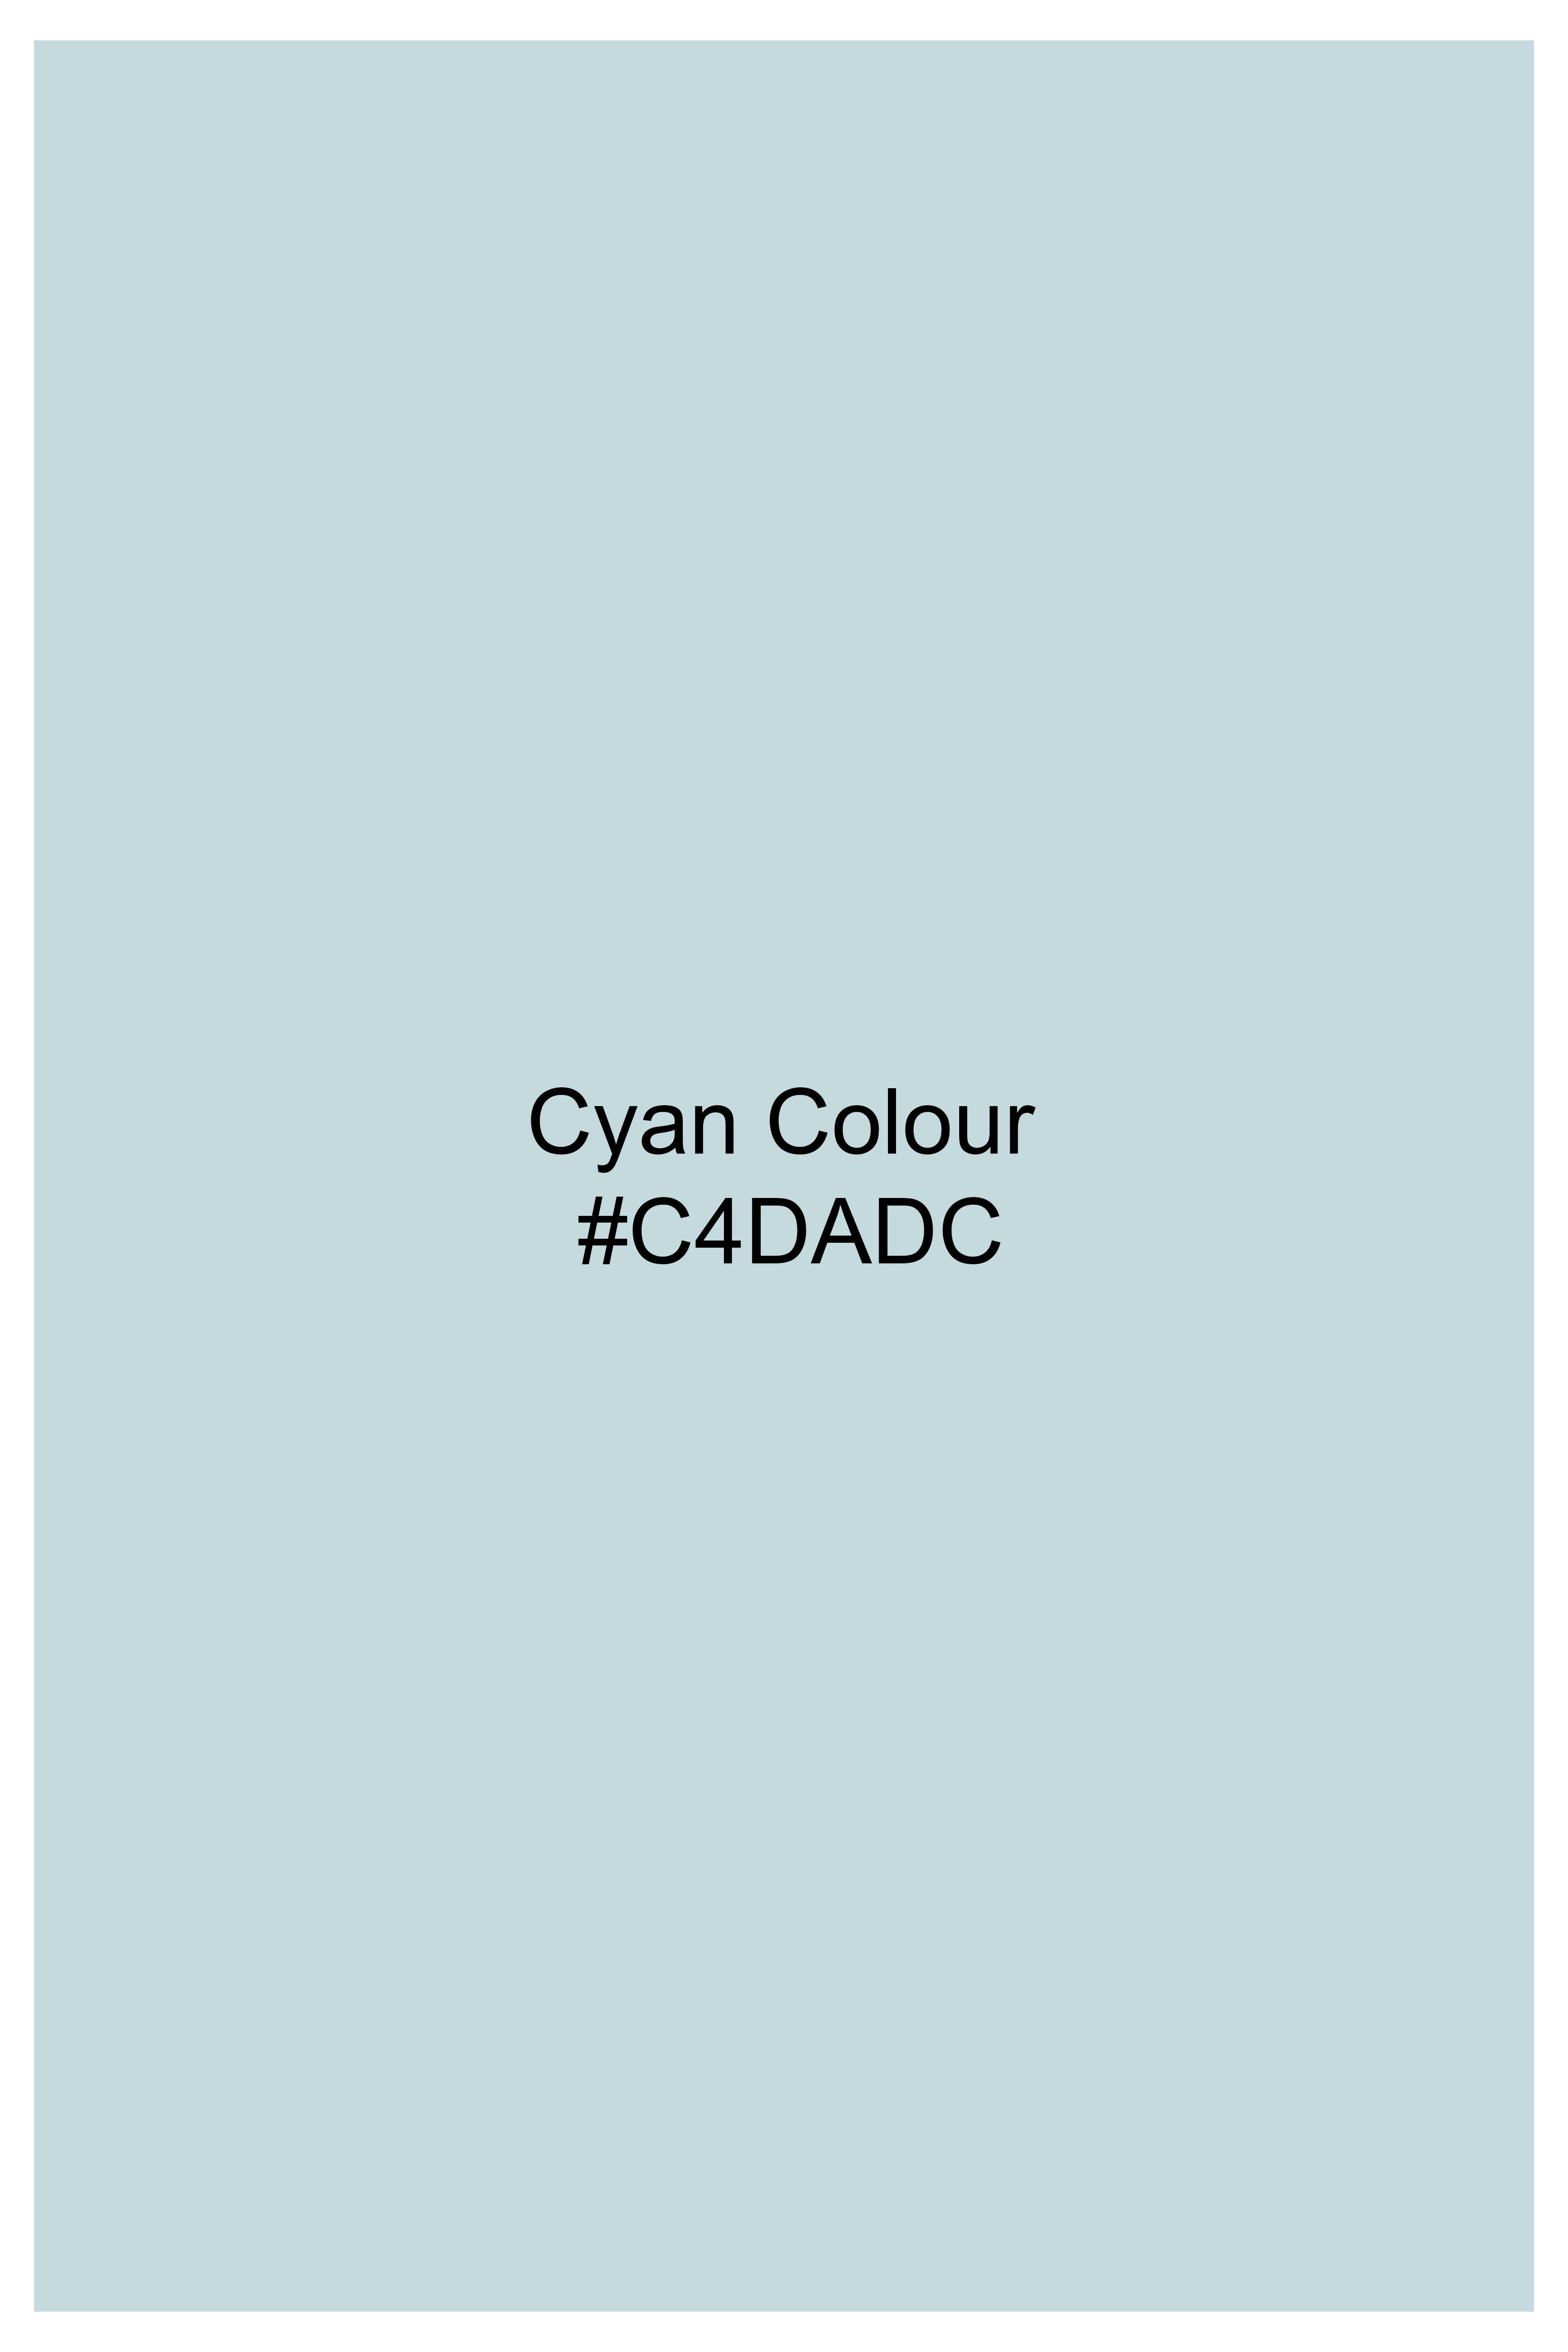 Cyan Green French Crown Printed Subtle Sheen Super Soft Premium Cotton Designer Shirt